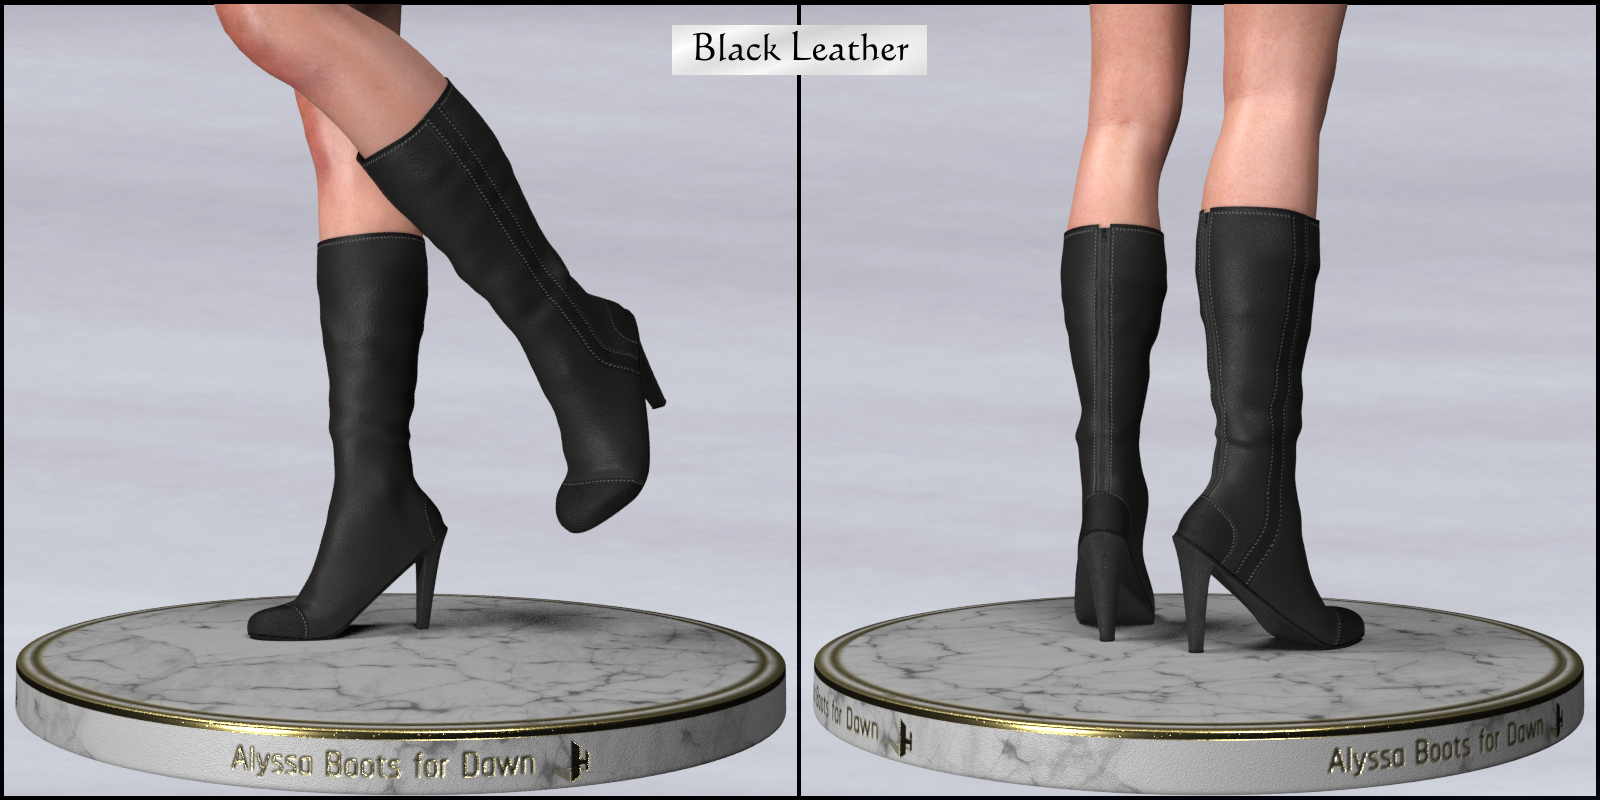 01 Black Leather.jpg